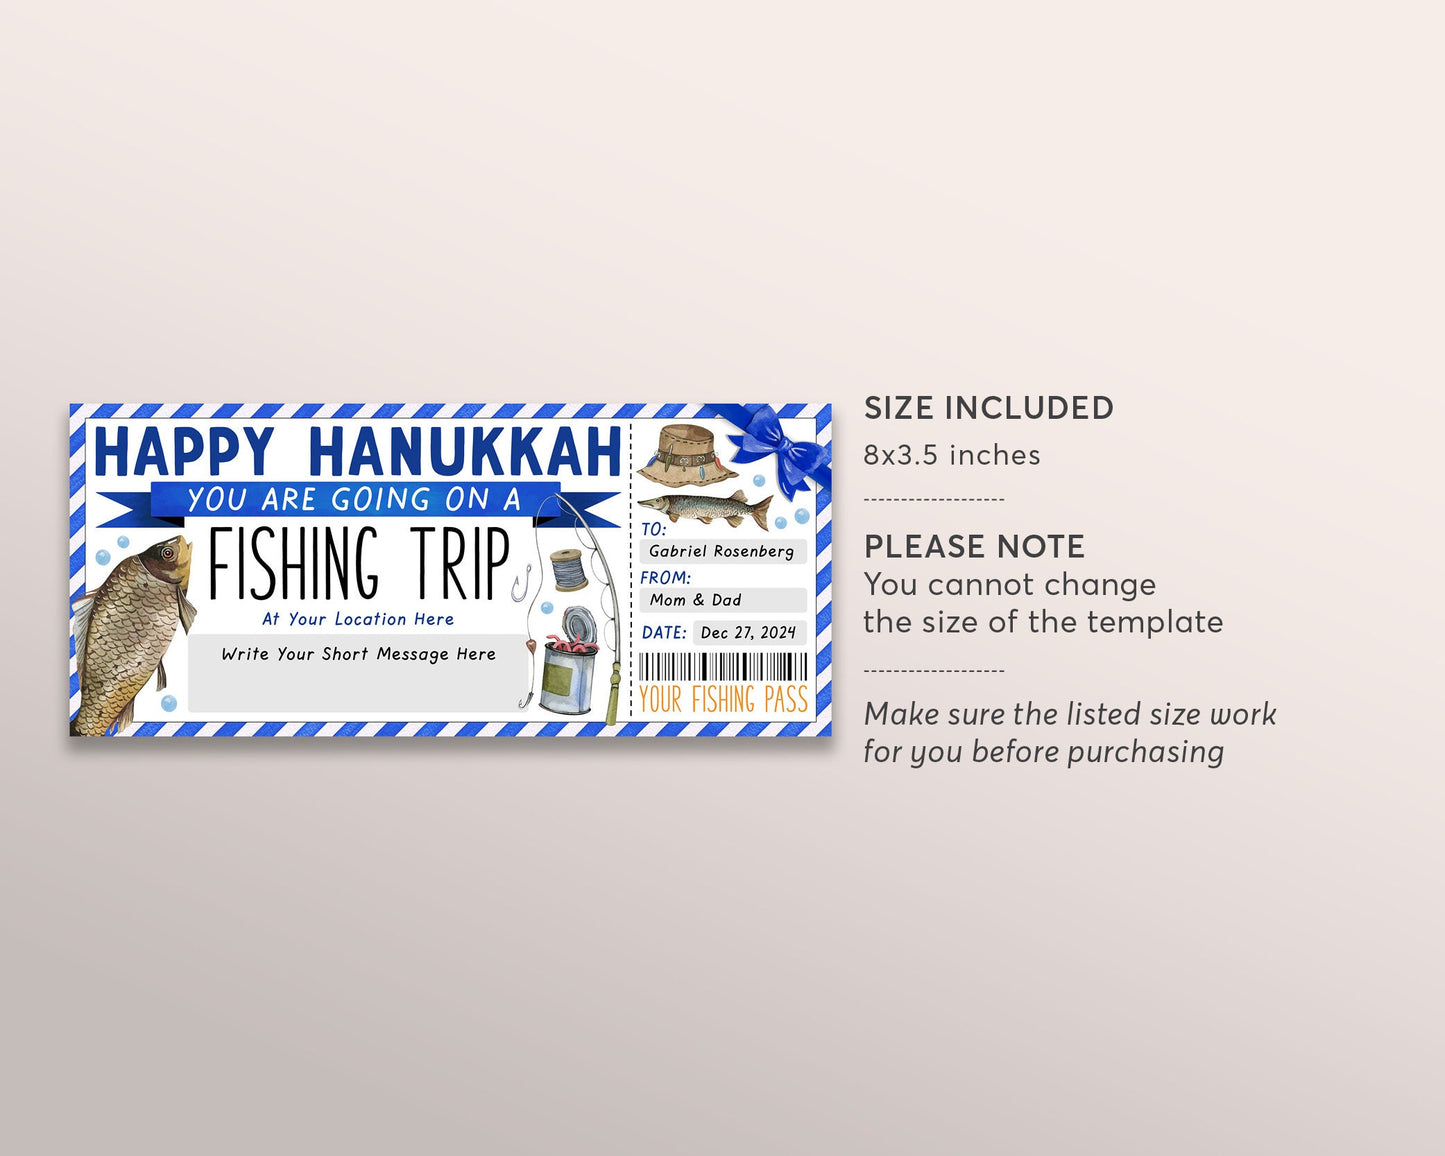 Hanukkah Retirement Fishing Trip Ticket Editable Template, Chanukah Fishing Trip Reveal Gift Certificate, Fishing Day Trip Voucher Coupon